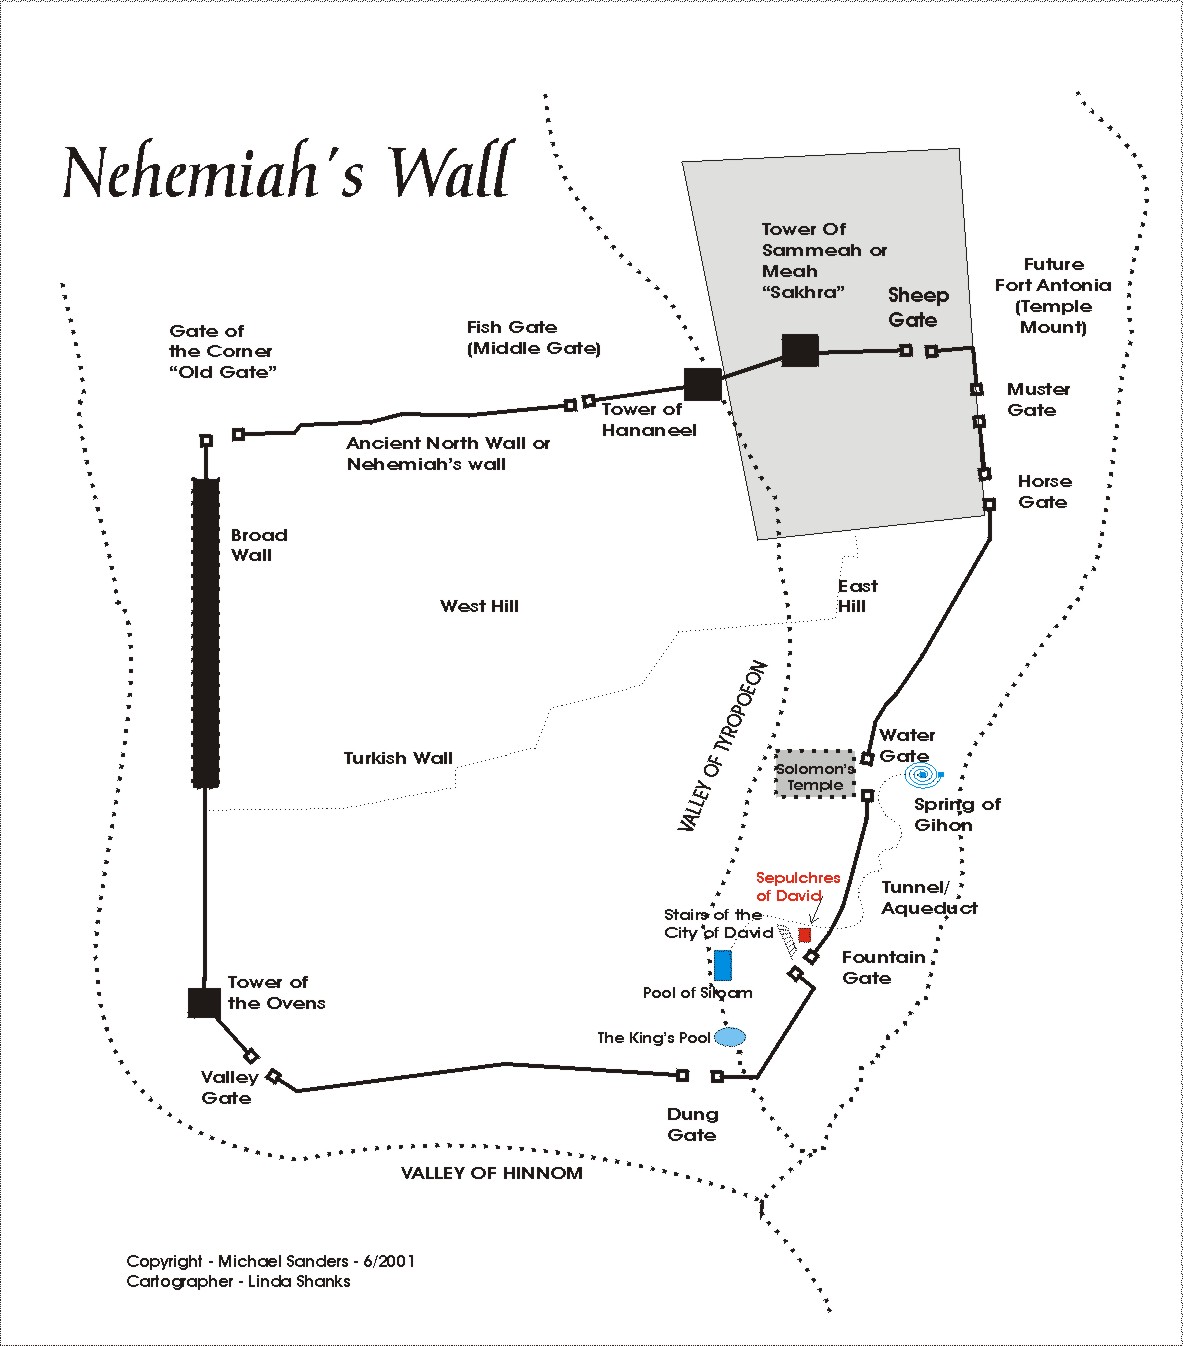 walls and gates of Nehemiah's Jerusalem